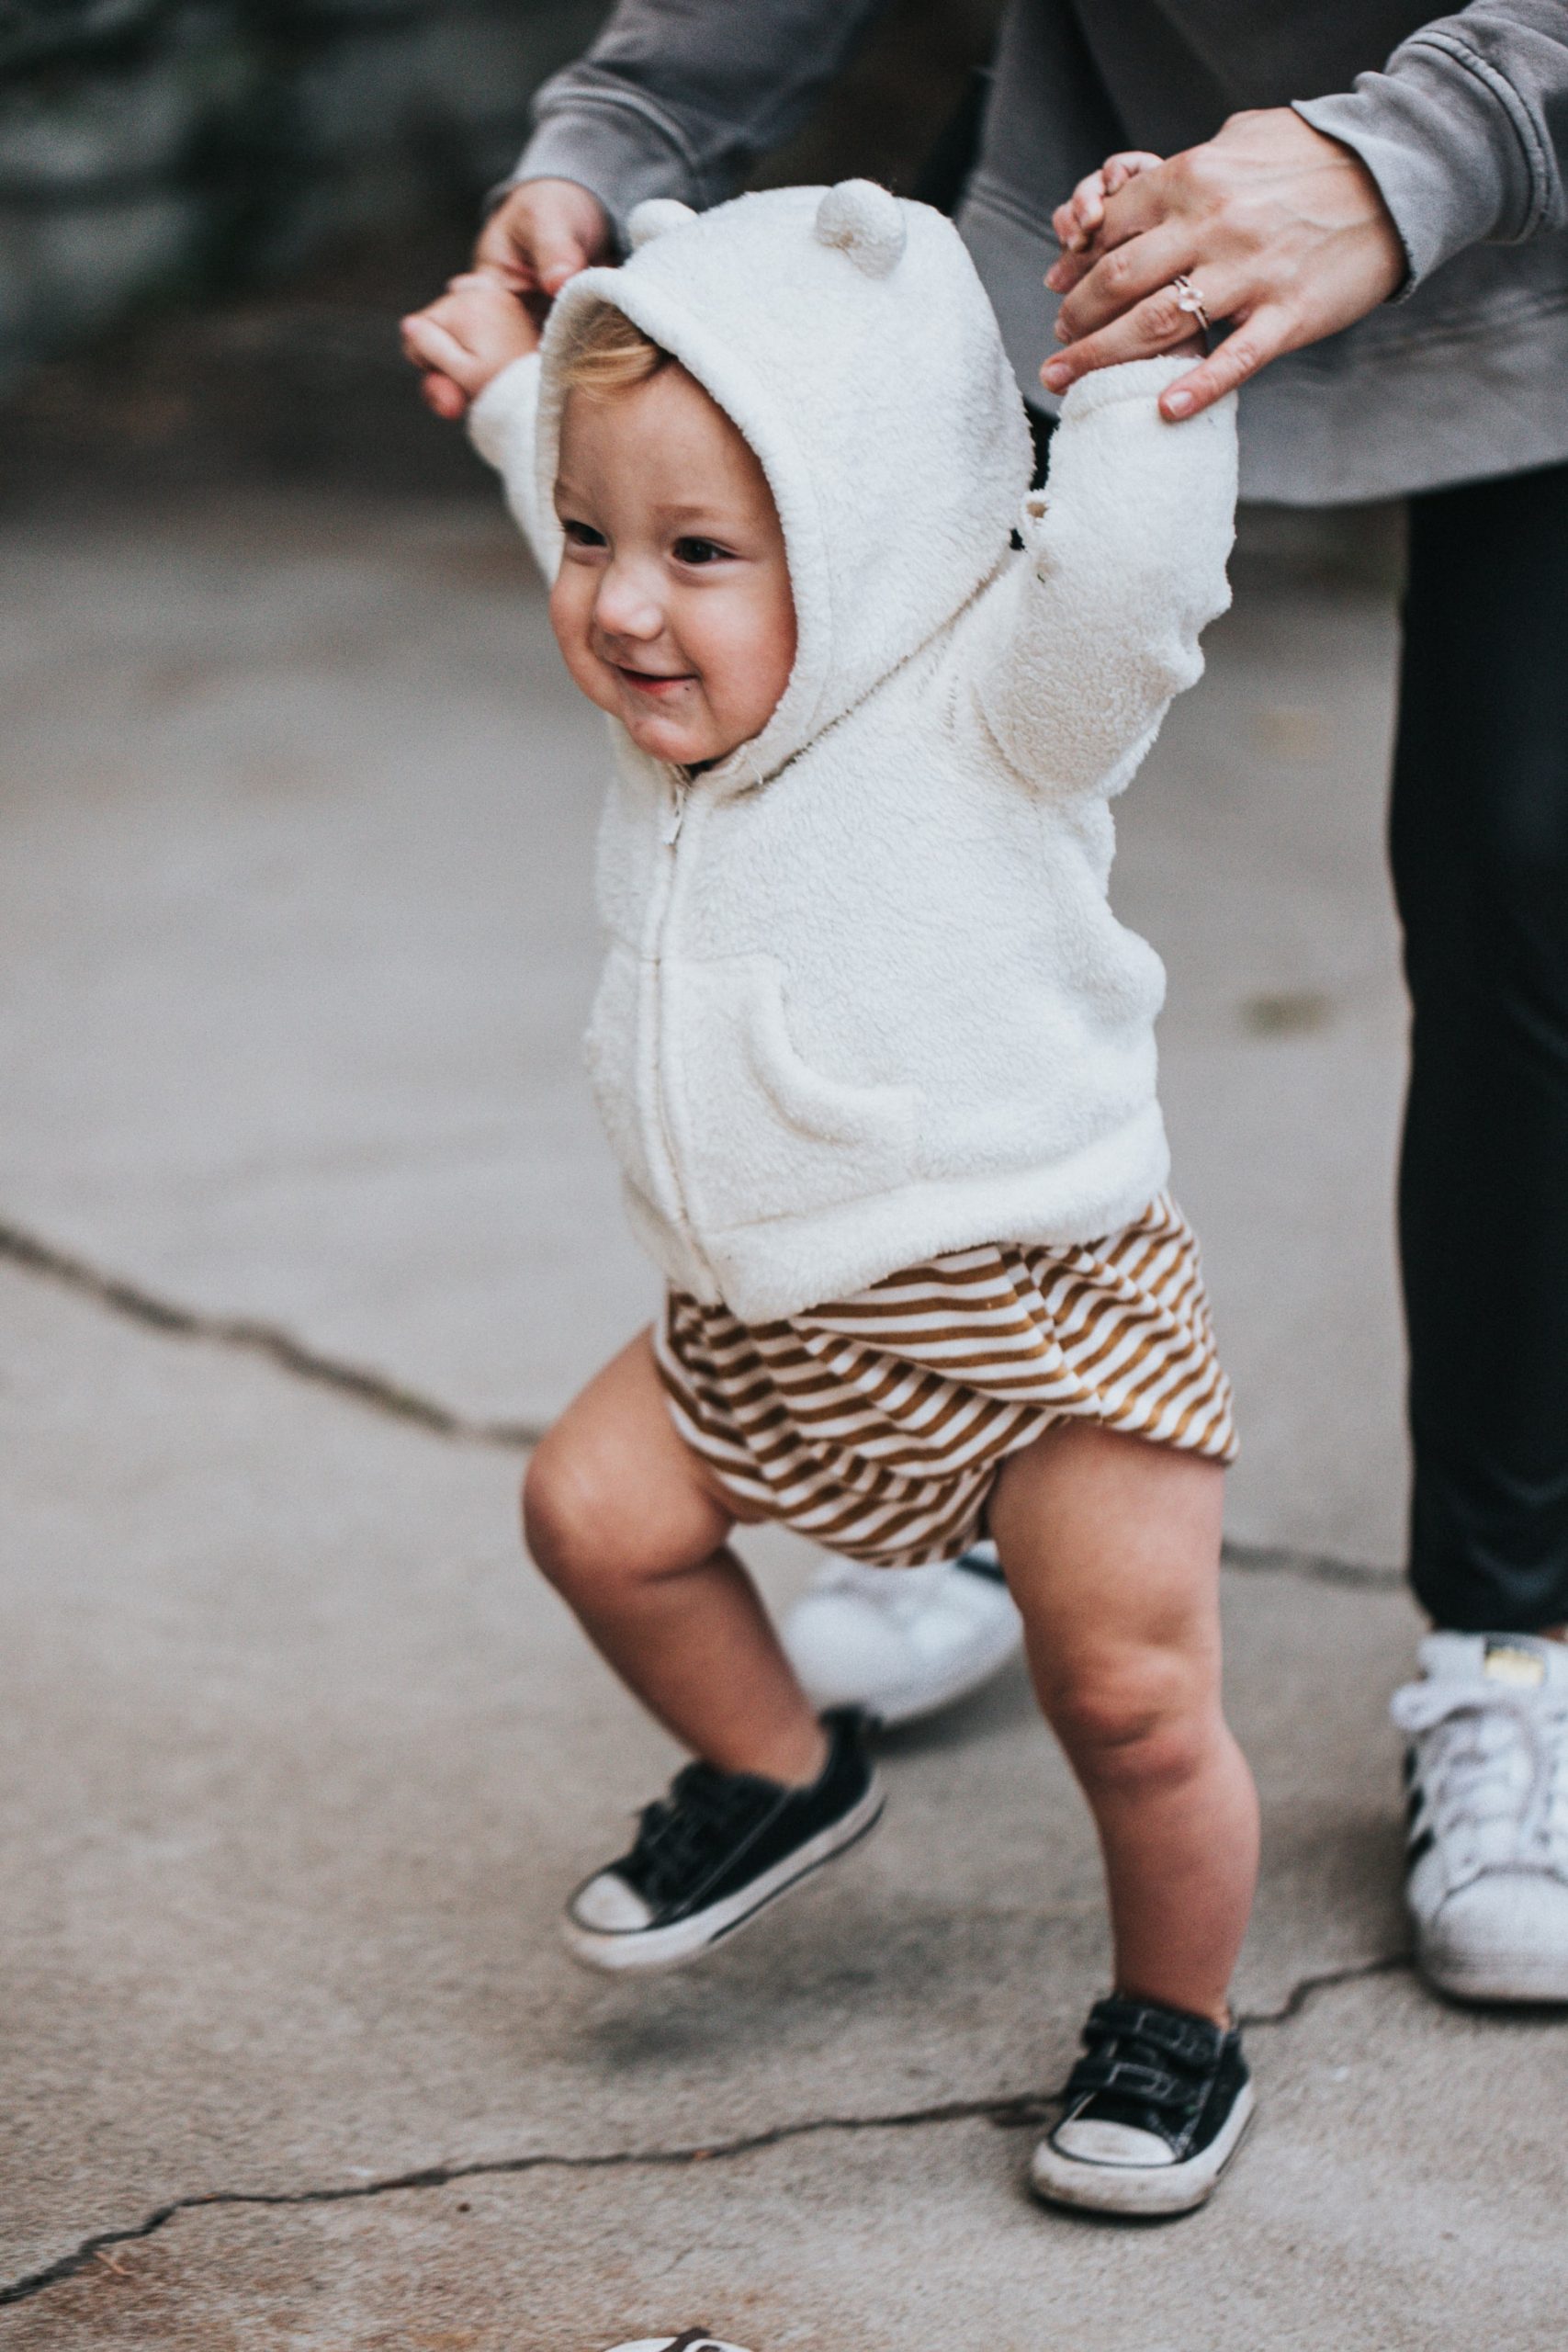 tips to help your baby start walking, baby walking